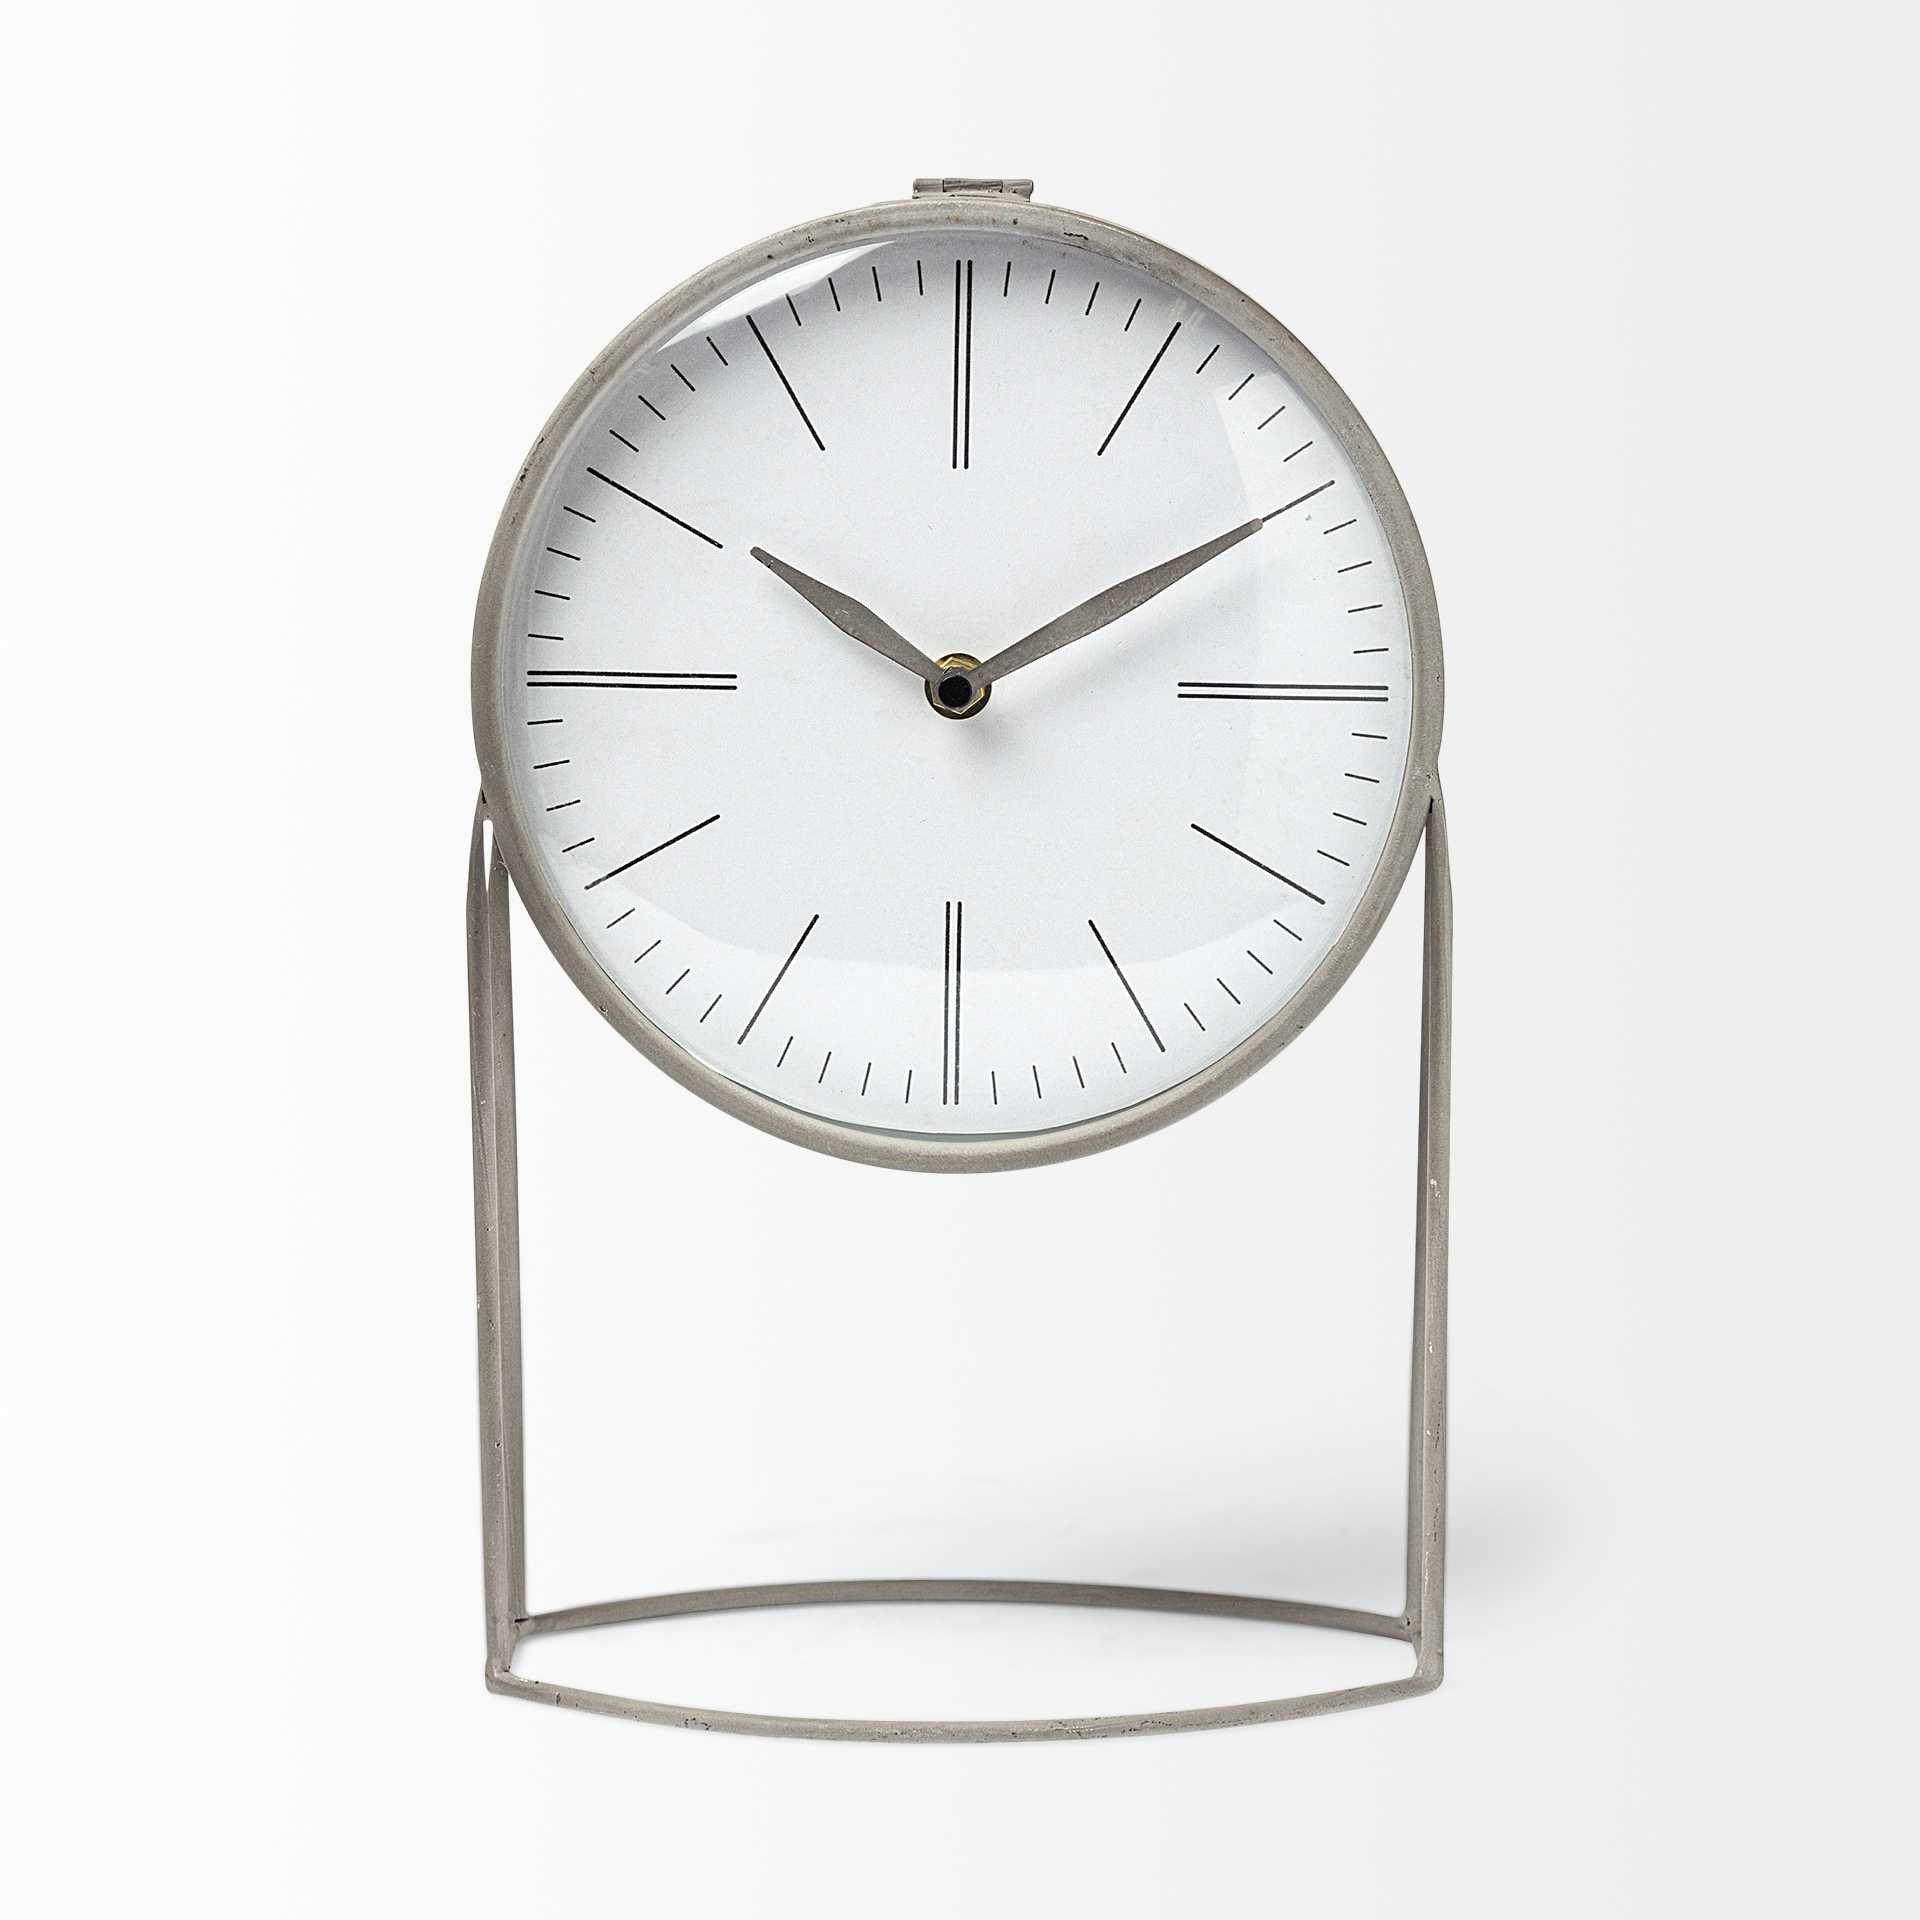 Gray Metal Circular Desk Table Clock Equipped With A Quartz Movement